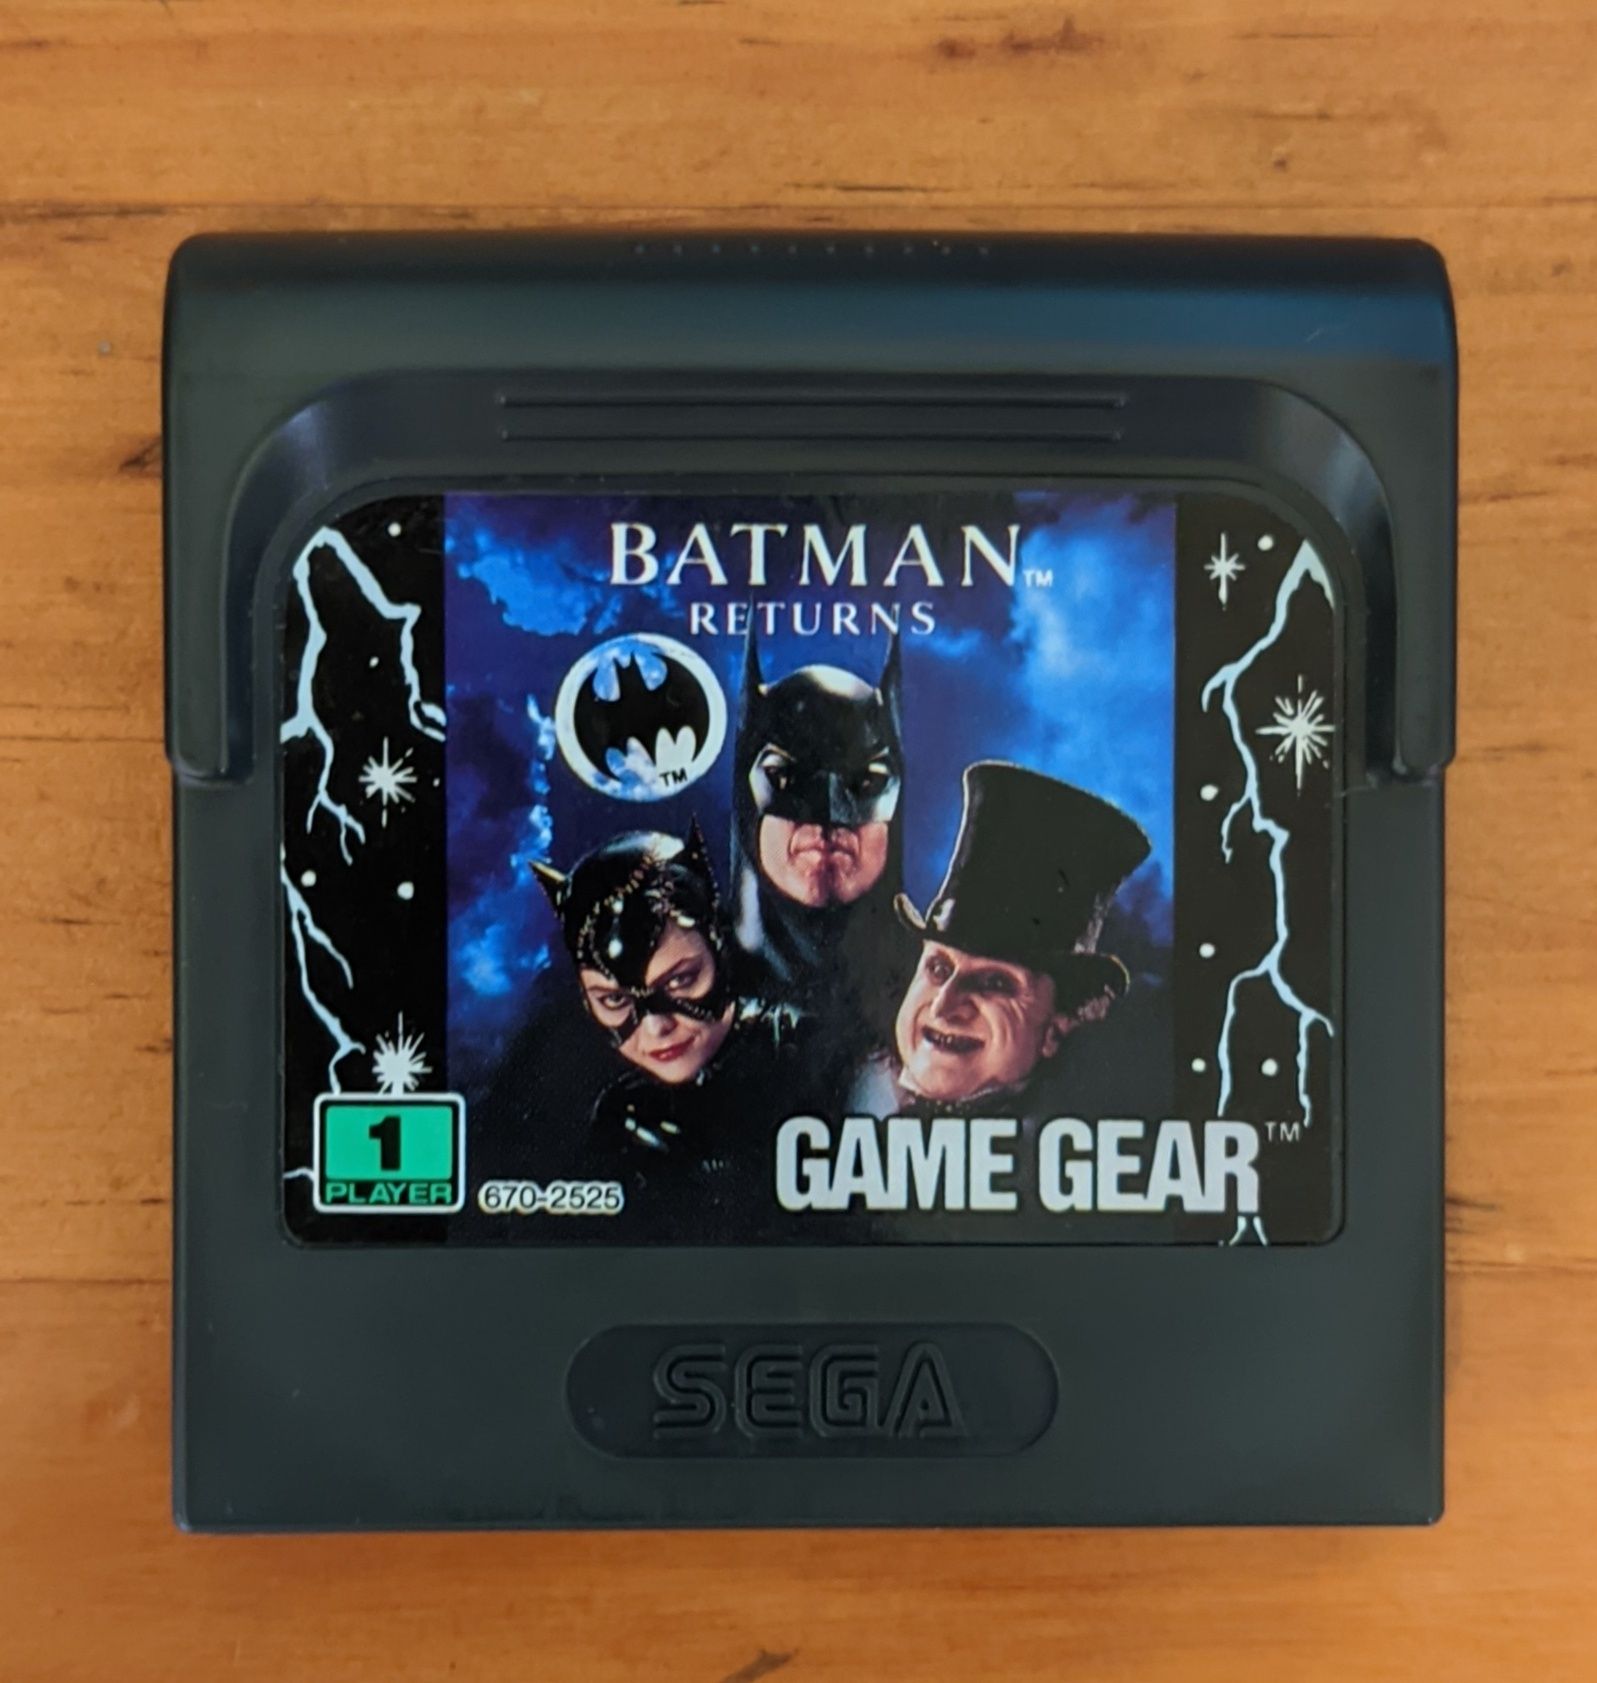 Batman Returns - Game gear